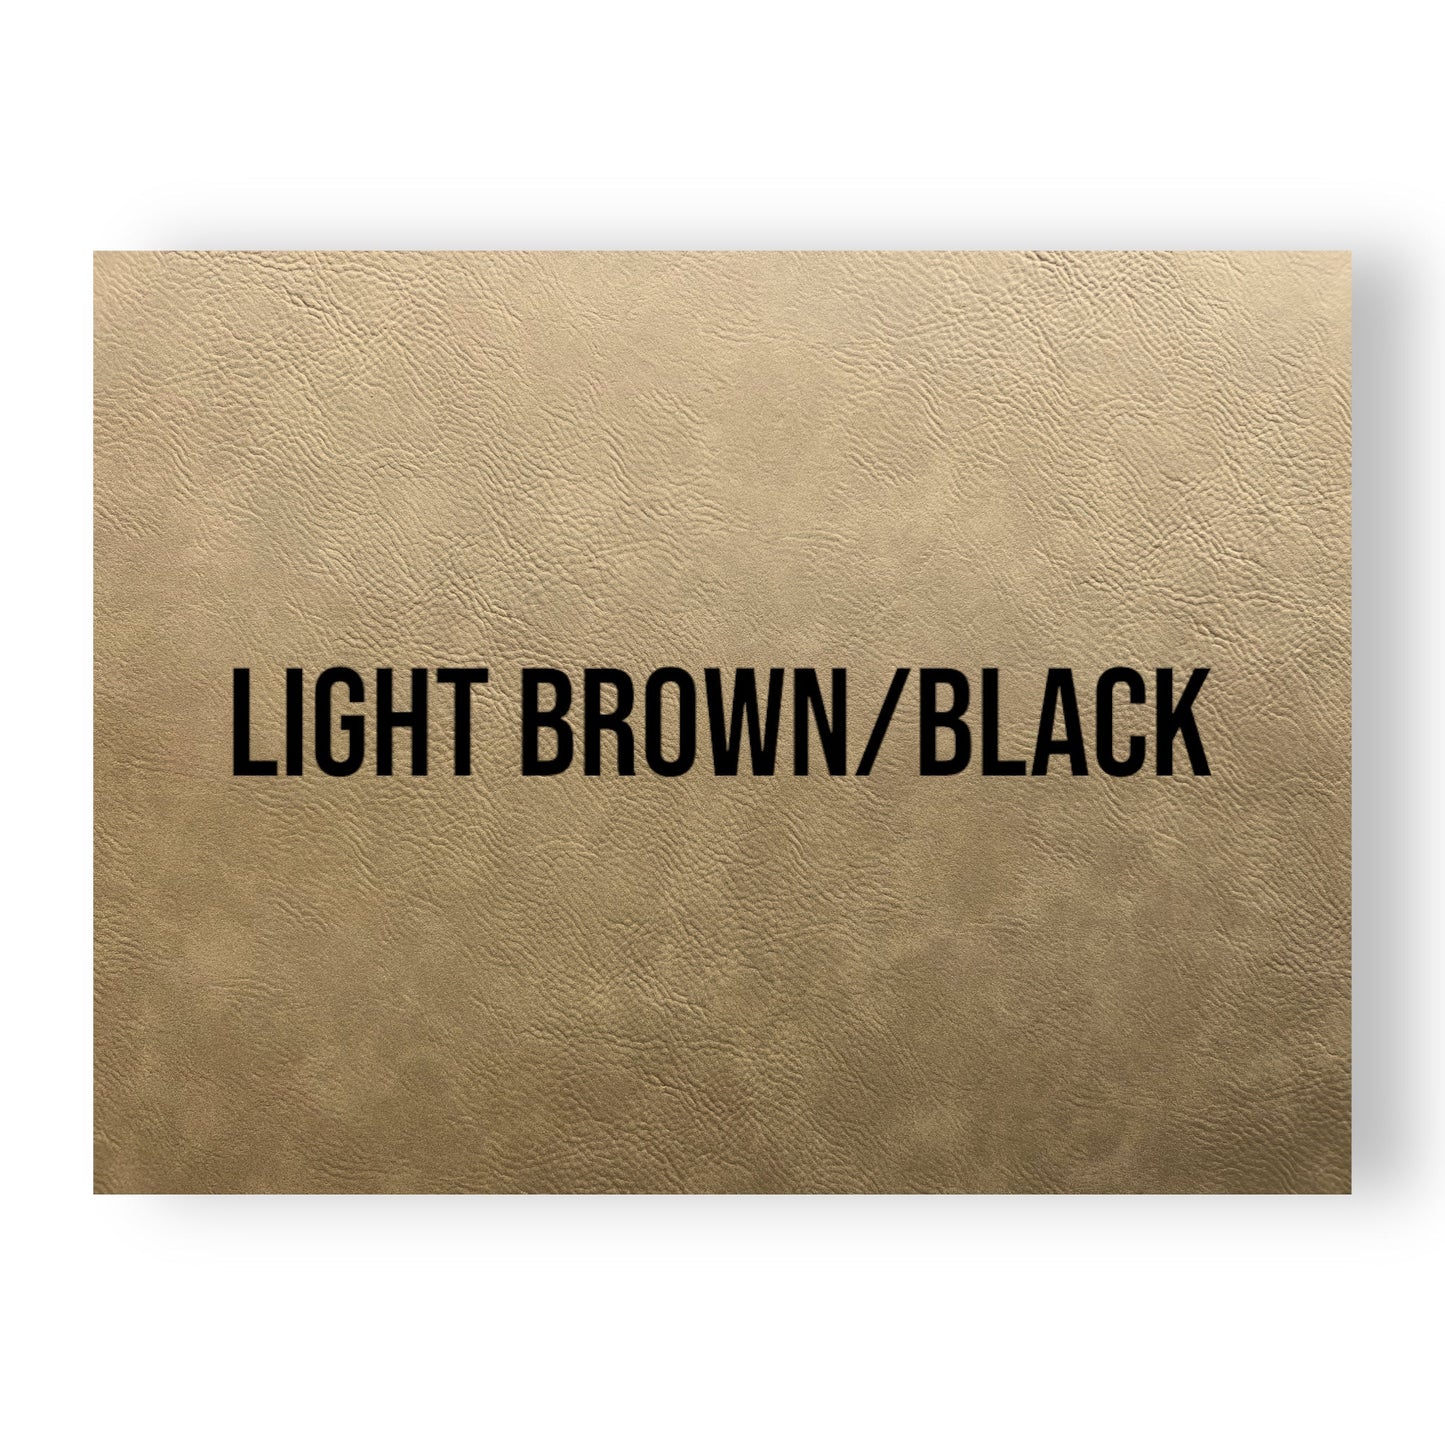 NO ADHESIVE LIGHT BROWN/BLACK LEATHERETTE SHEET (12"x24")